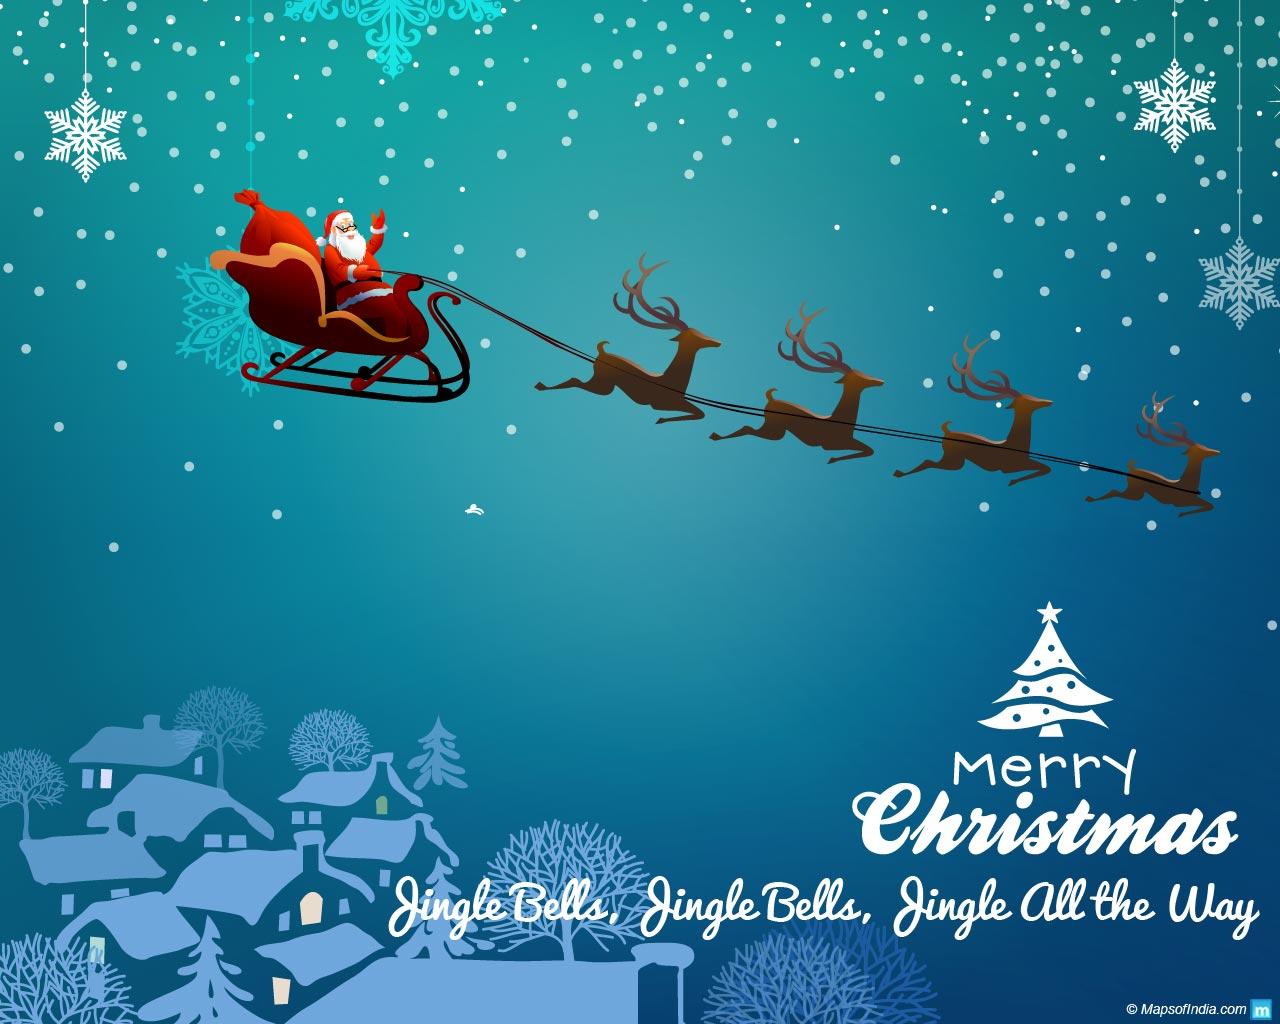 Christmas Wallpaper and Image Free Download Christmas Wallpaper